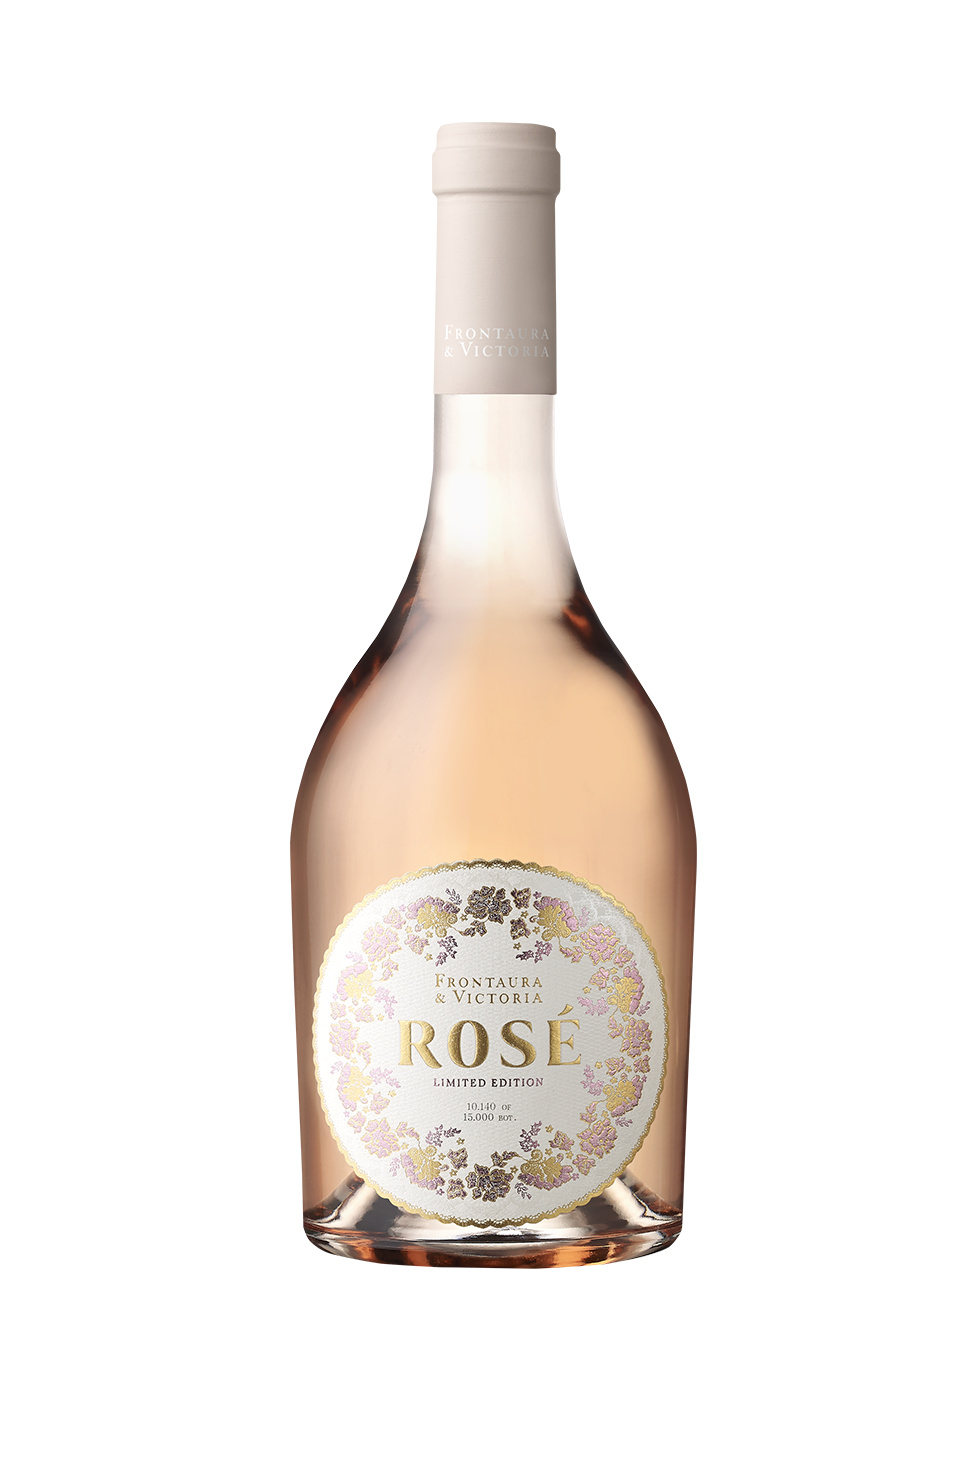 vino-rosado-castilla-leon-DO-frontaura-victoria-rose-03